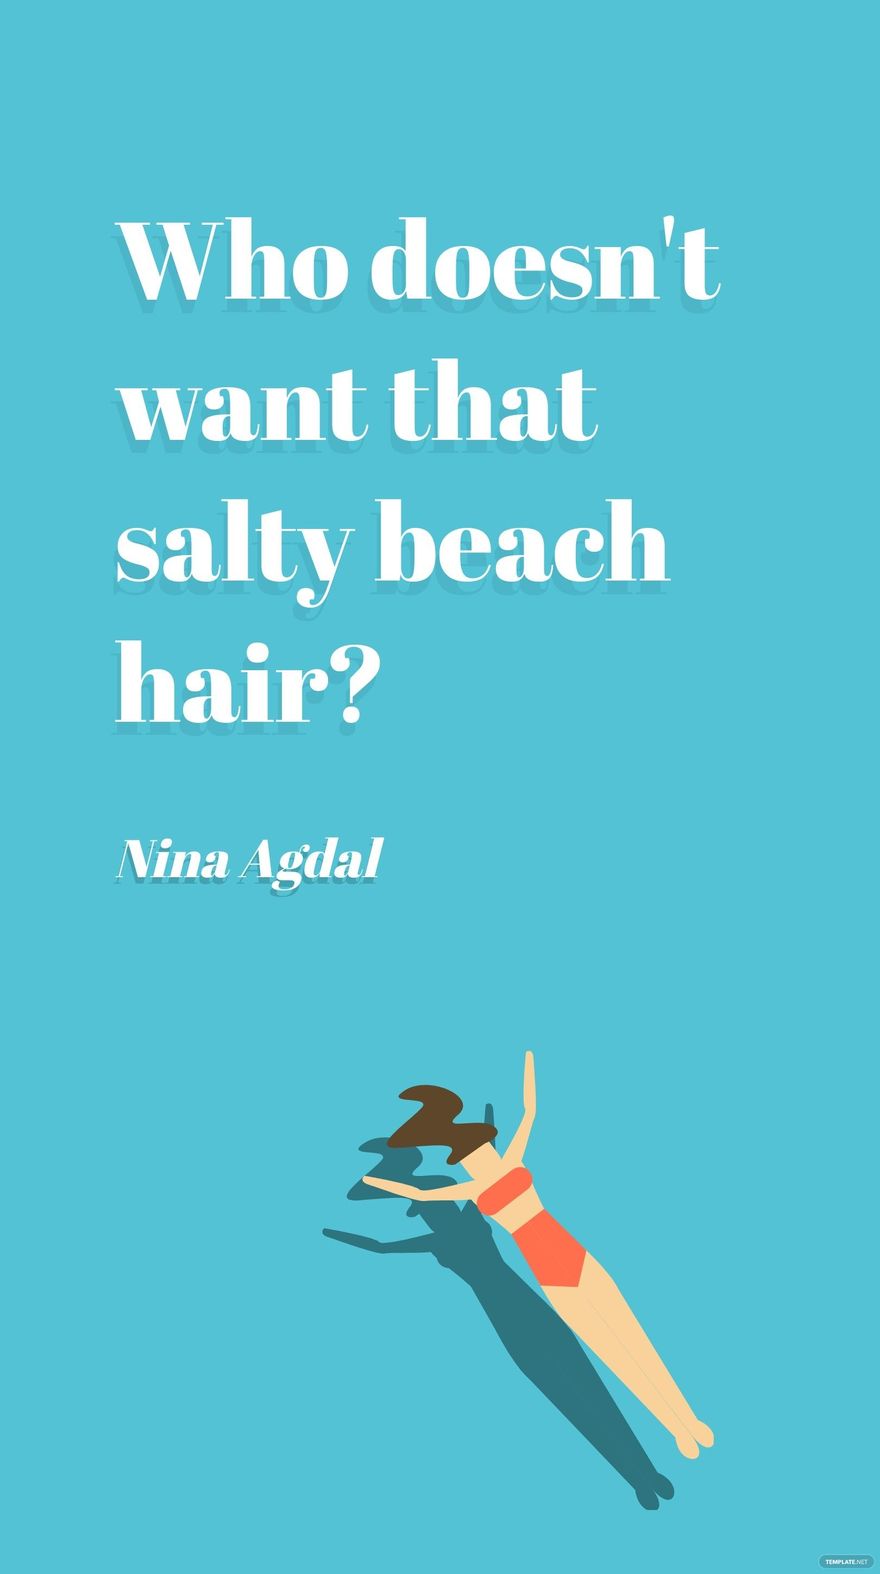 Nina Agdal - Who doesn't want that salty beach hair?